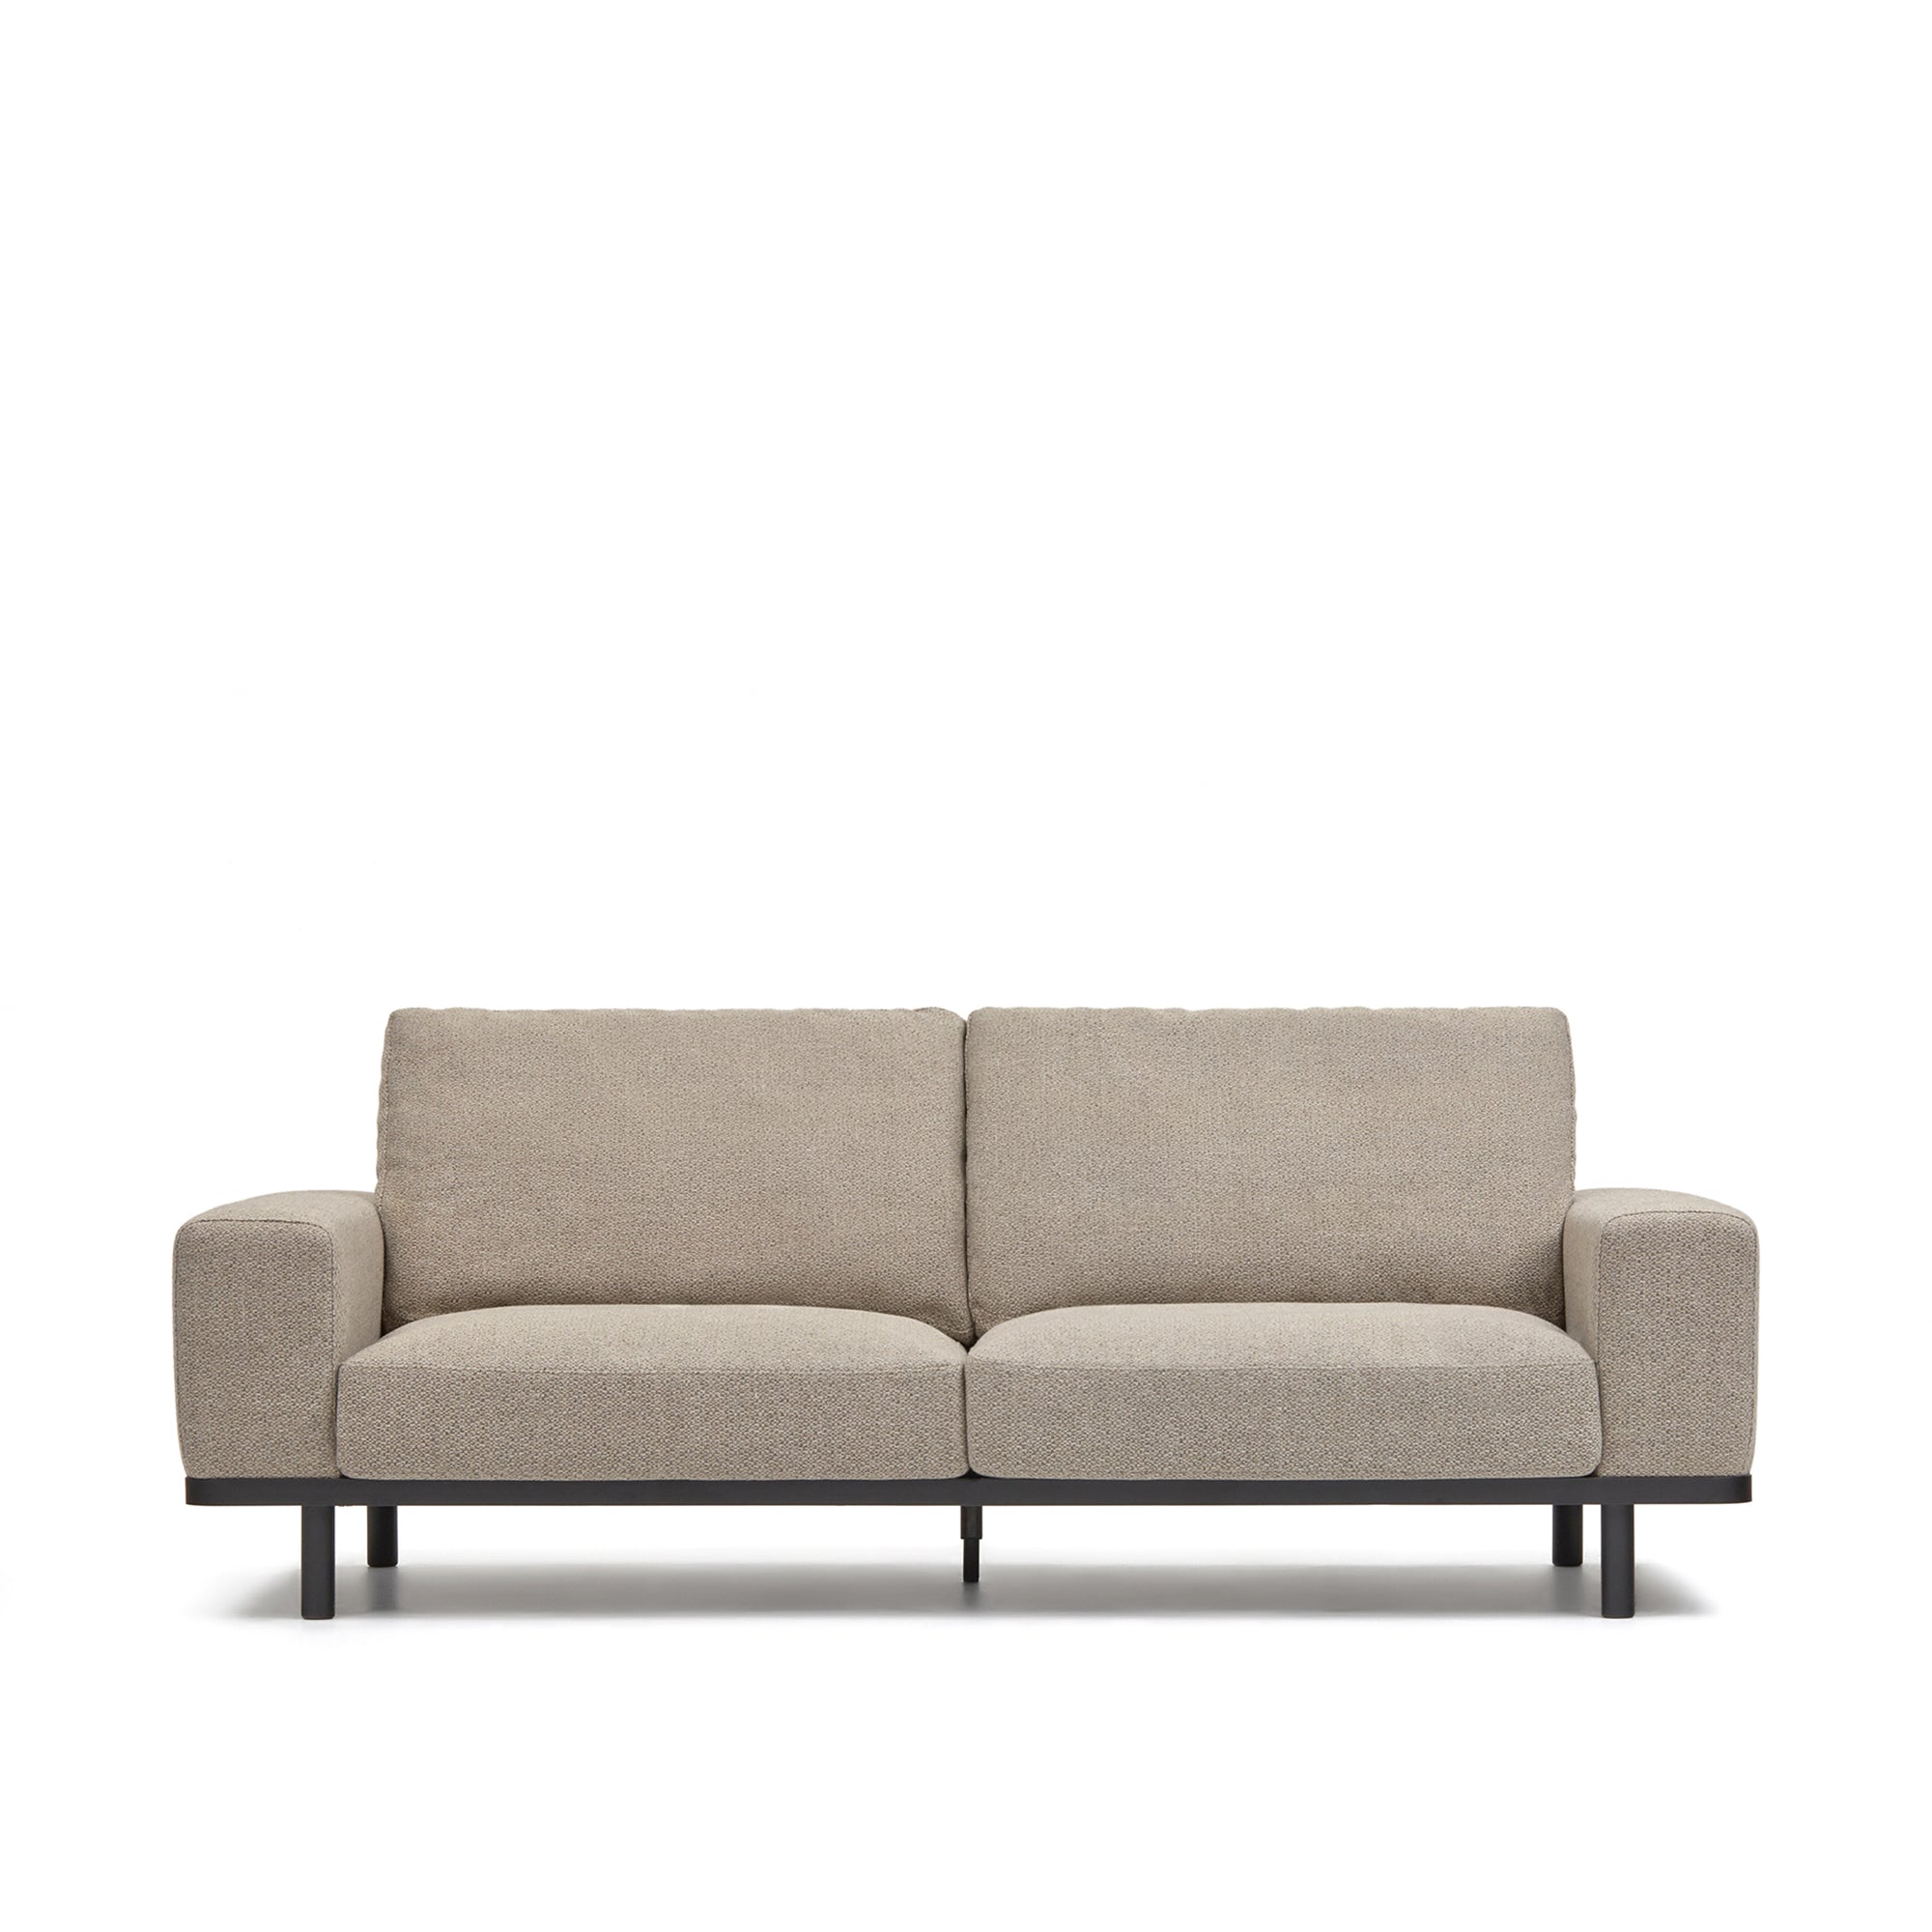 Noa 3 seater sofa in beige with dark finish legs, 230 cm